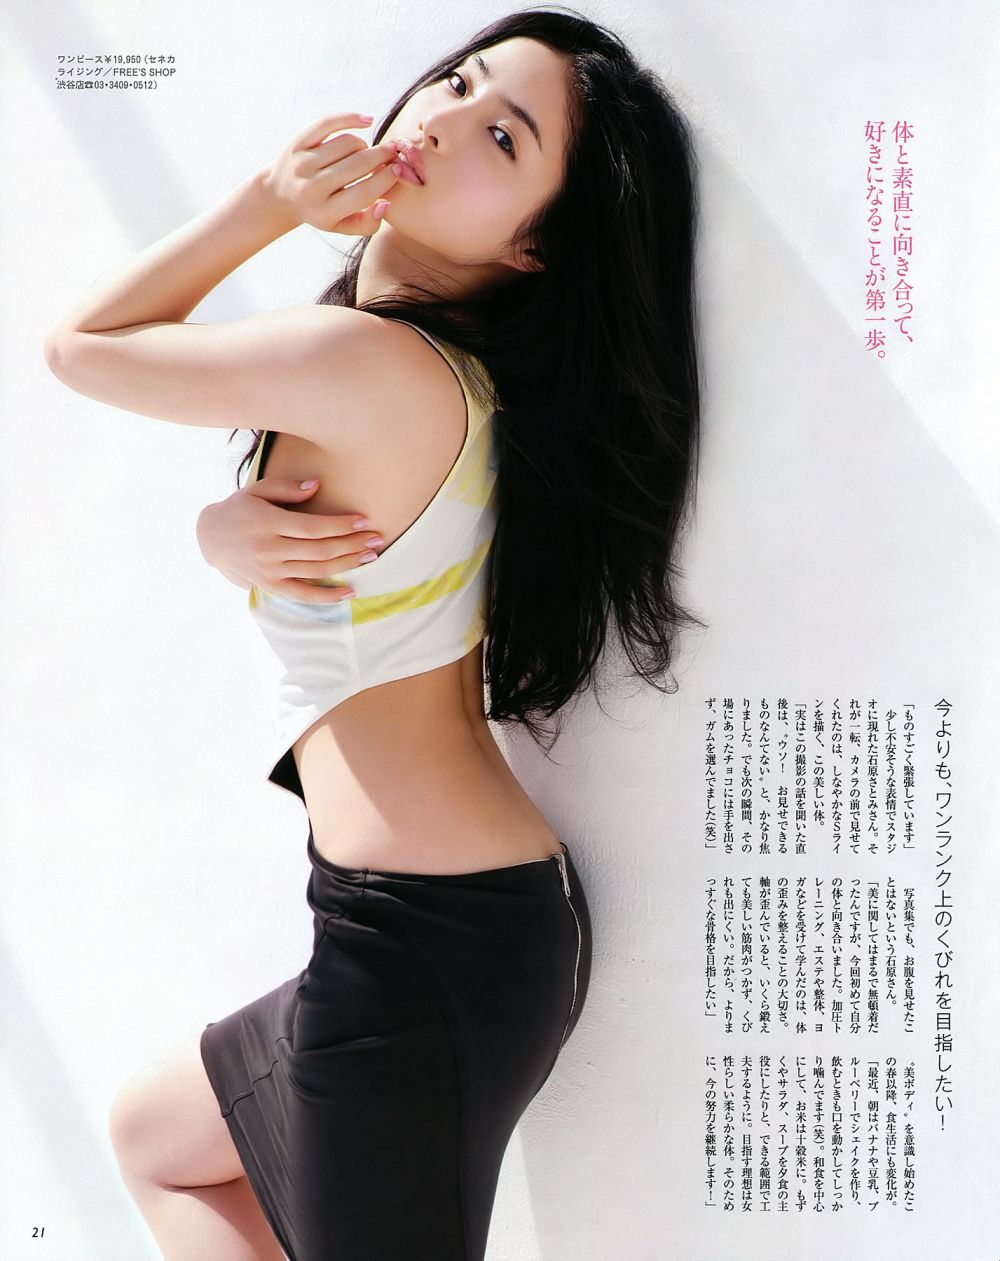 Satomi Ishihara Sexy and Hottest Photos , Latest Pics